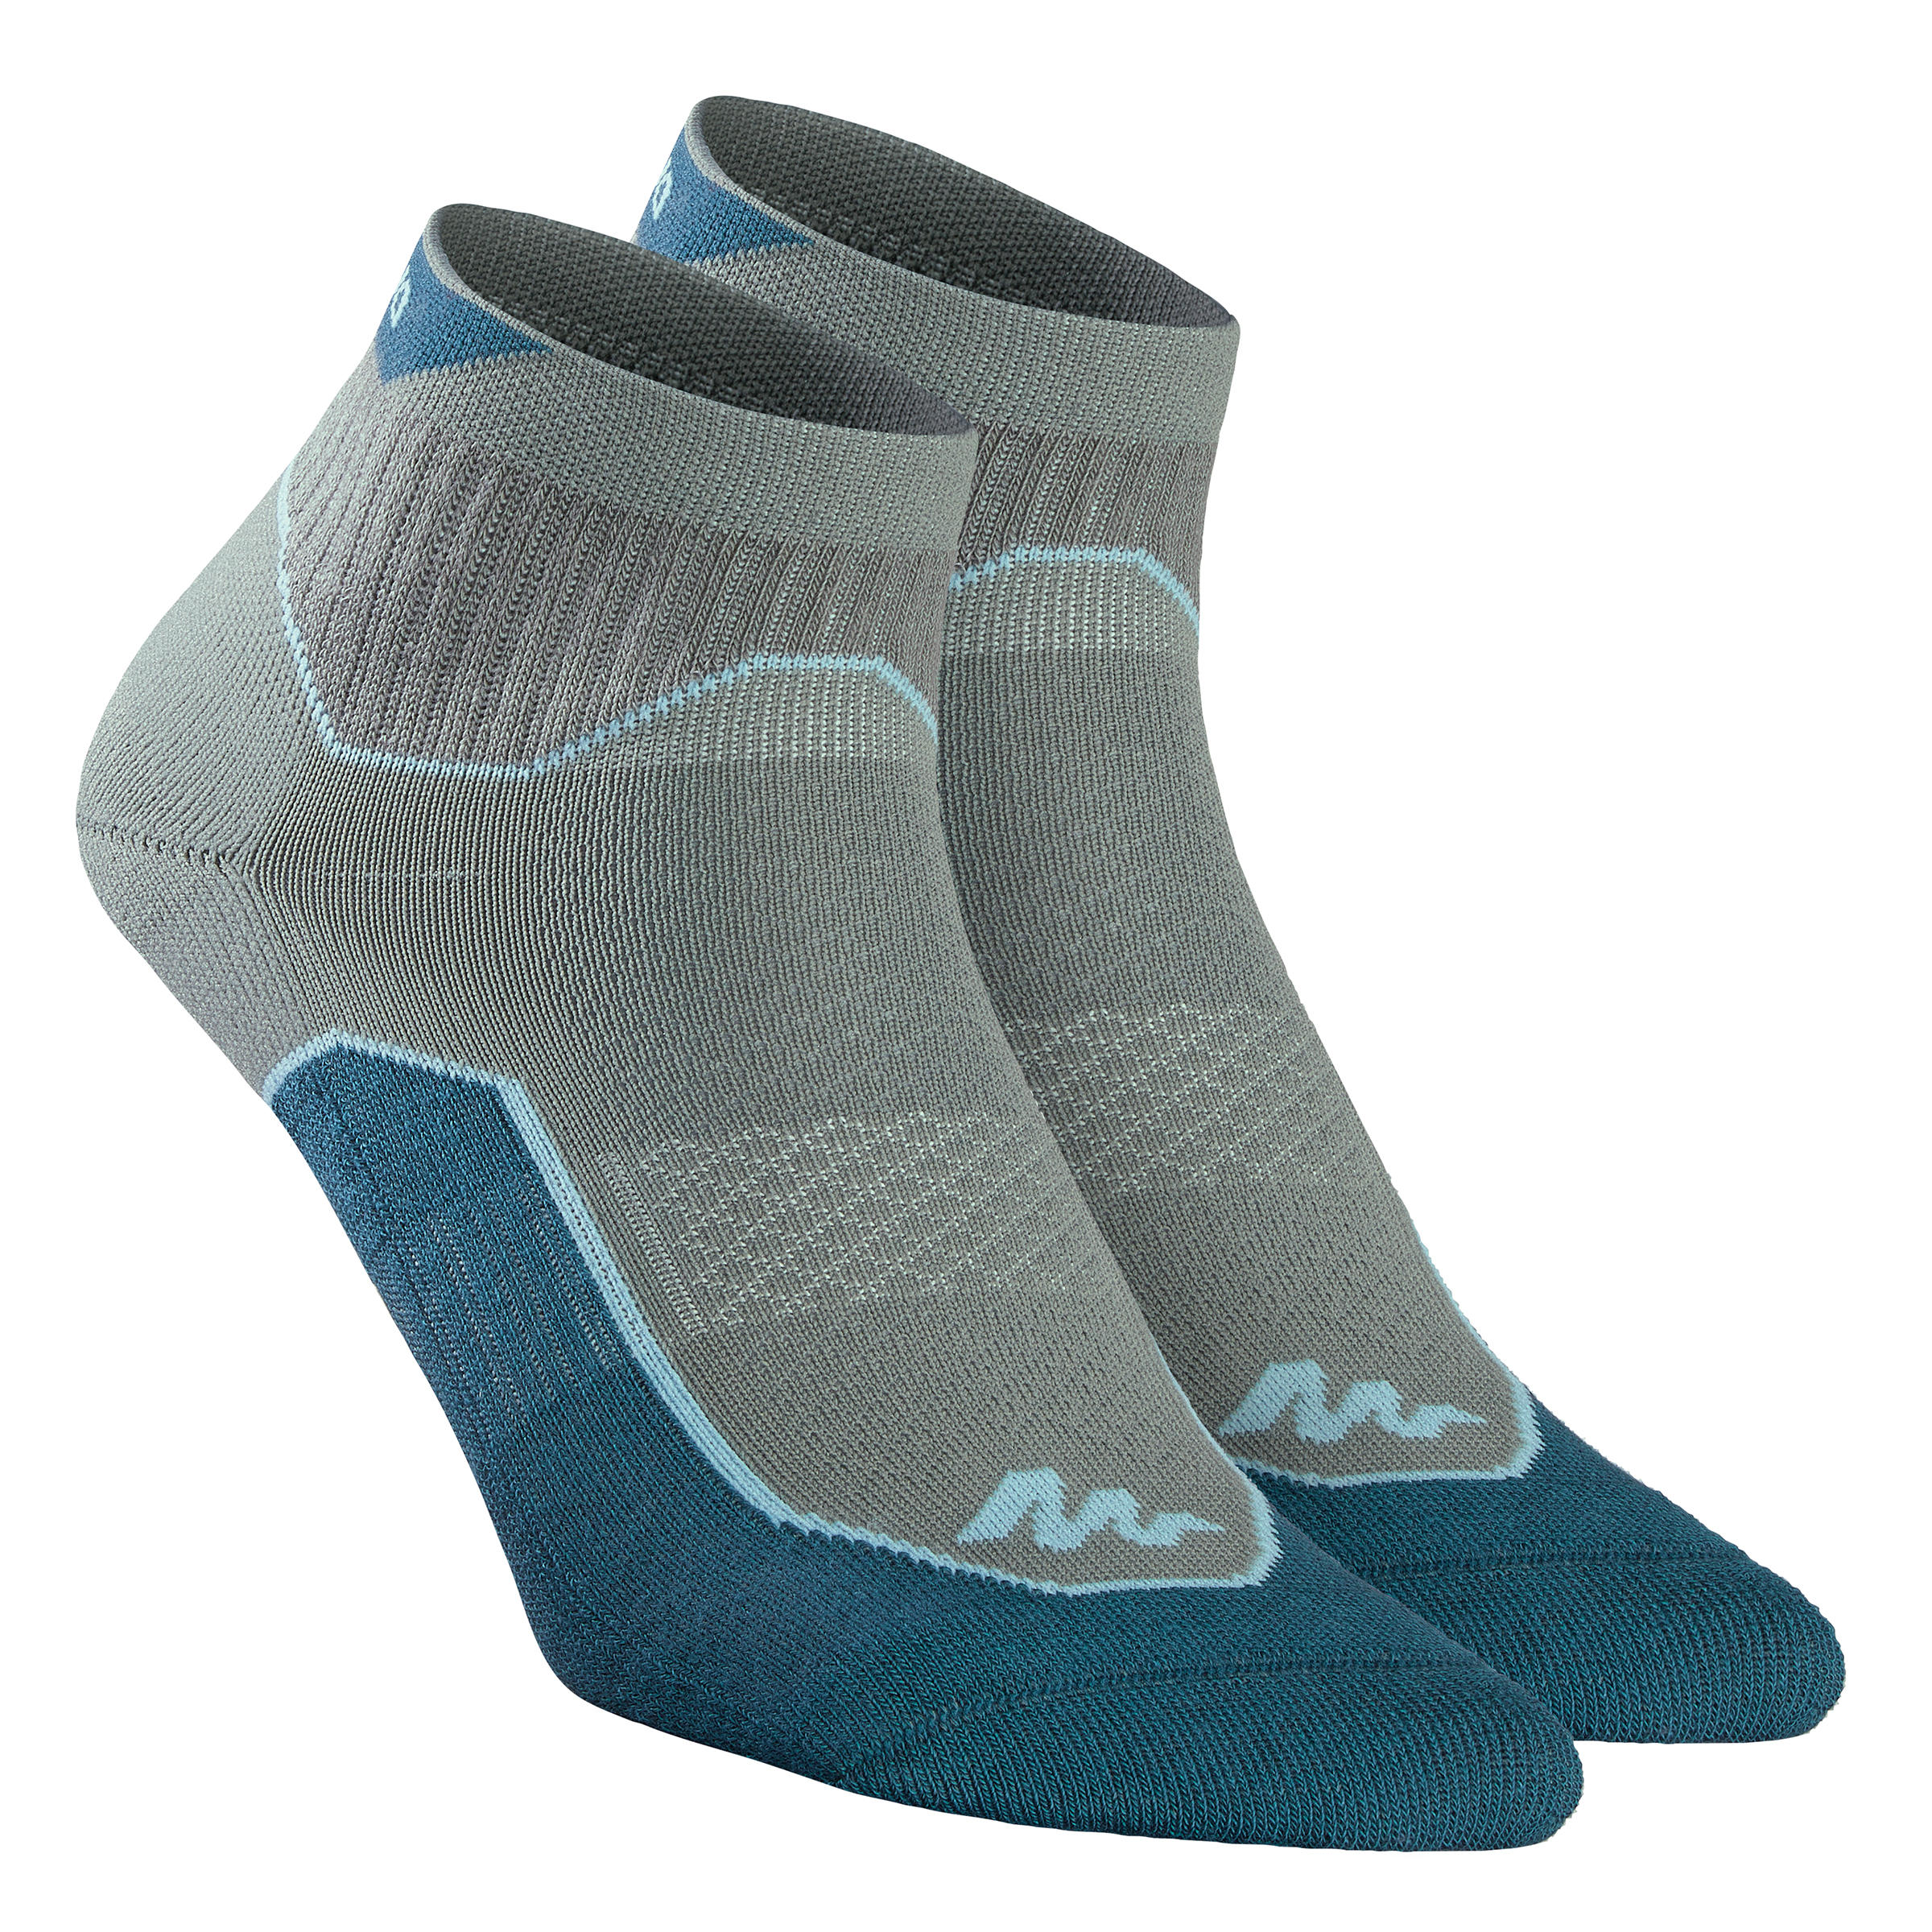 QUECHUA Country walking socks - NH500 Low - X 2 pairs - dark khaki